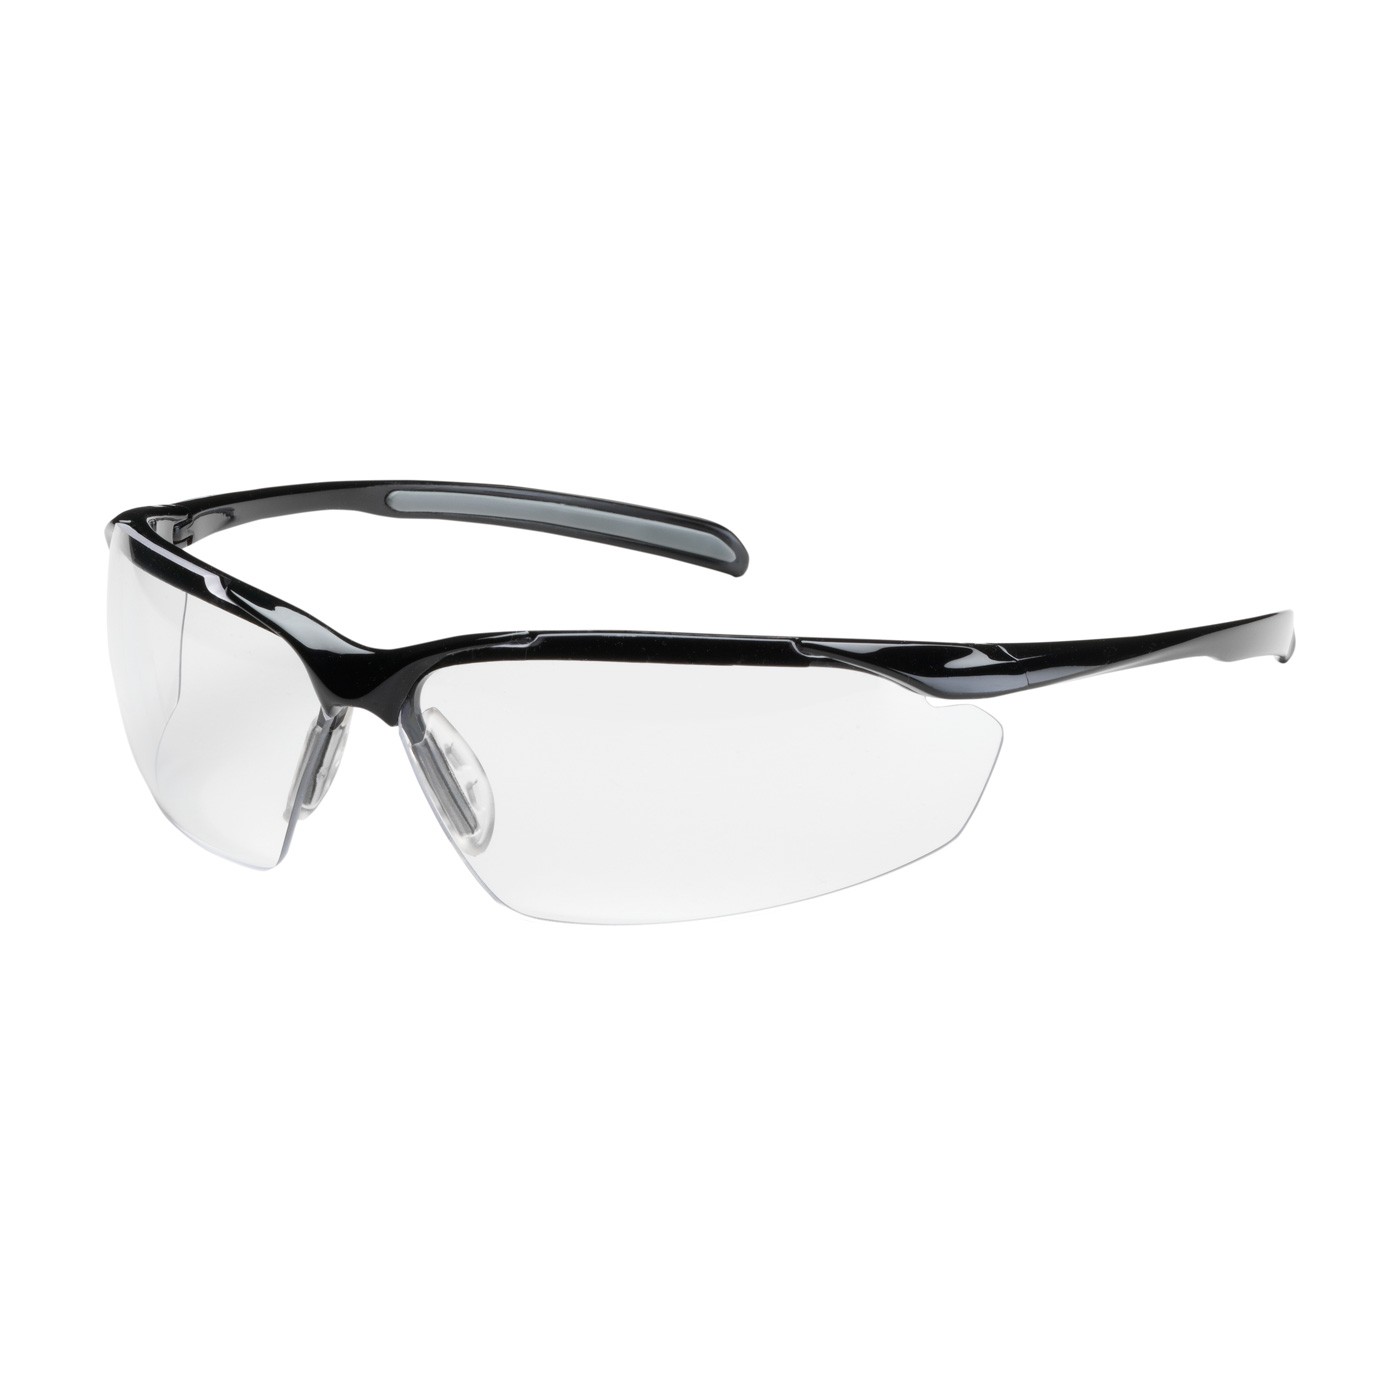 Safety Glasses Semi-Rimless ClearLense BlackFrame Anti-Scratch 12/BX 12/CS